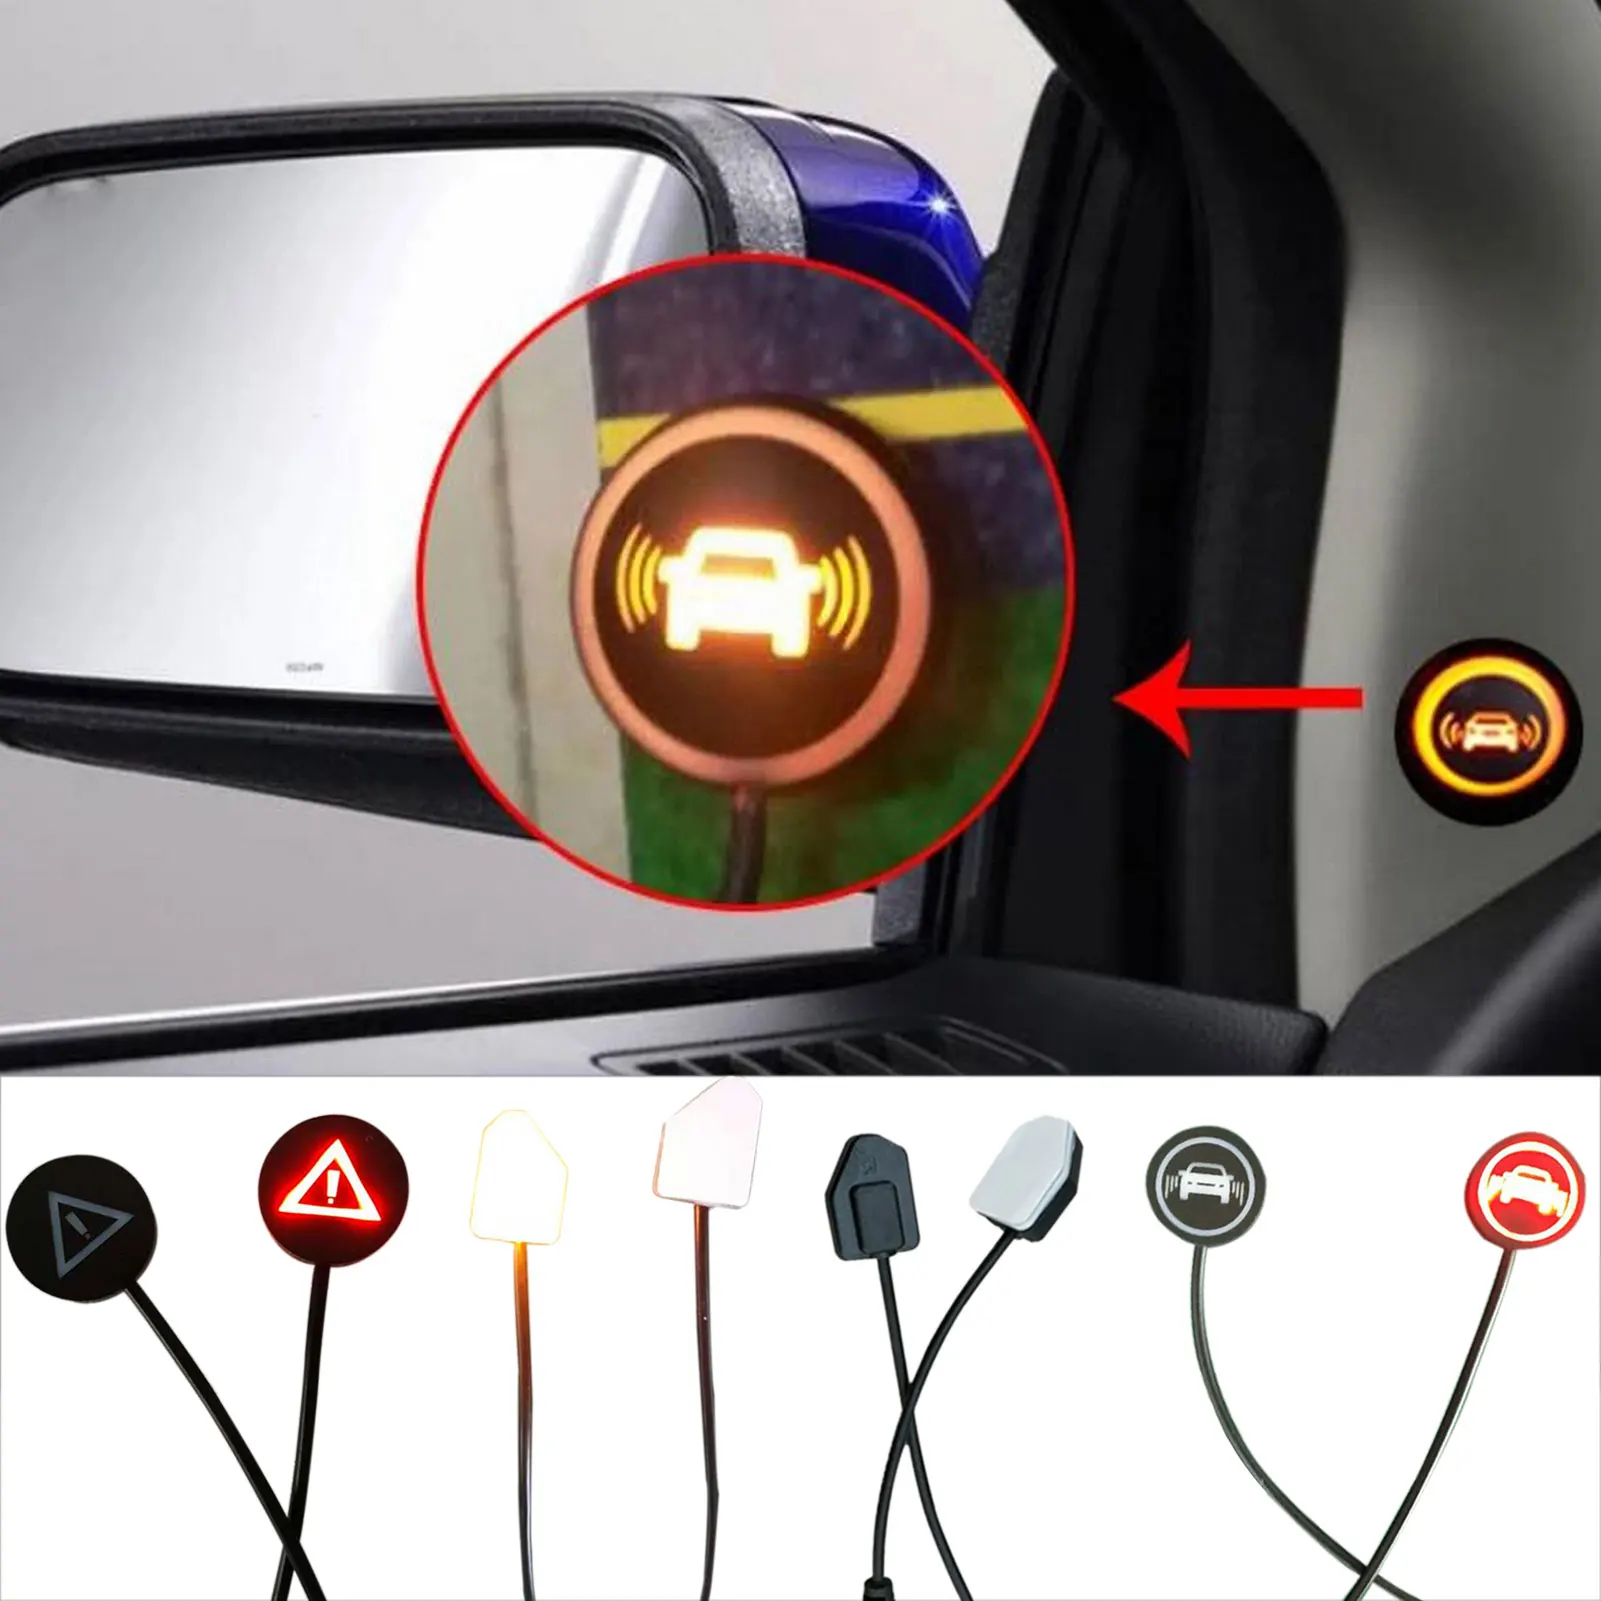 

Safety Driving Warning Light Assist Lane Change Blind Spot Prompt Signal Light Strobe Light For Car Blind Spot Monitoring System